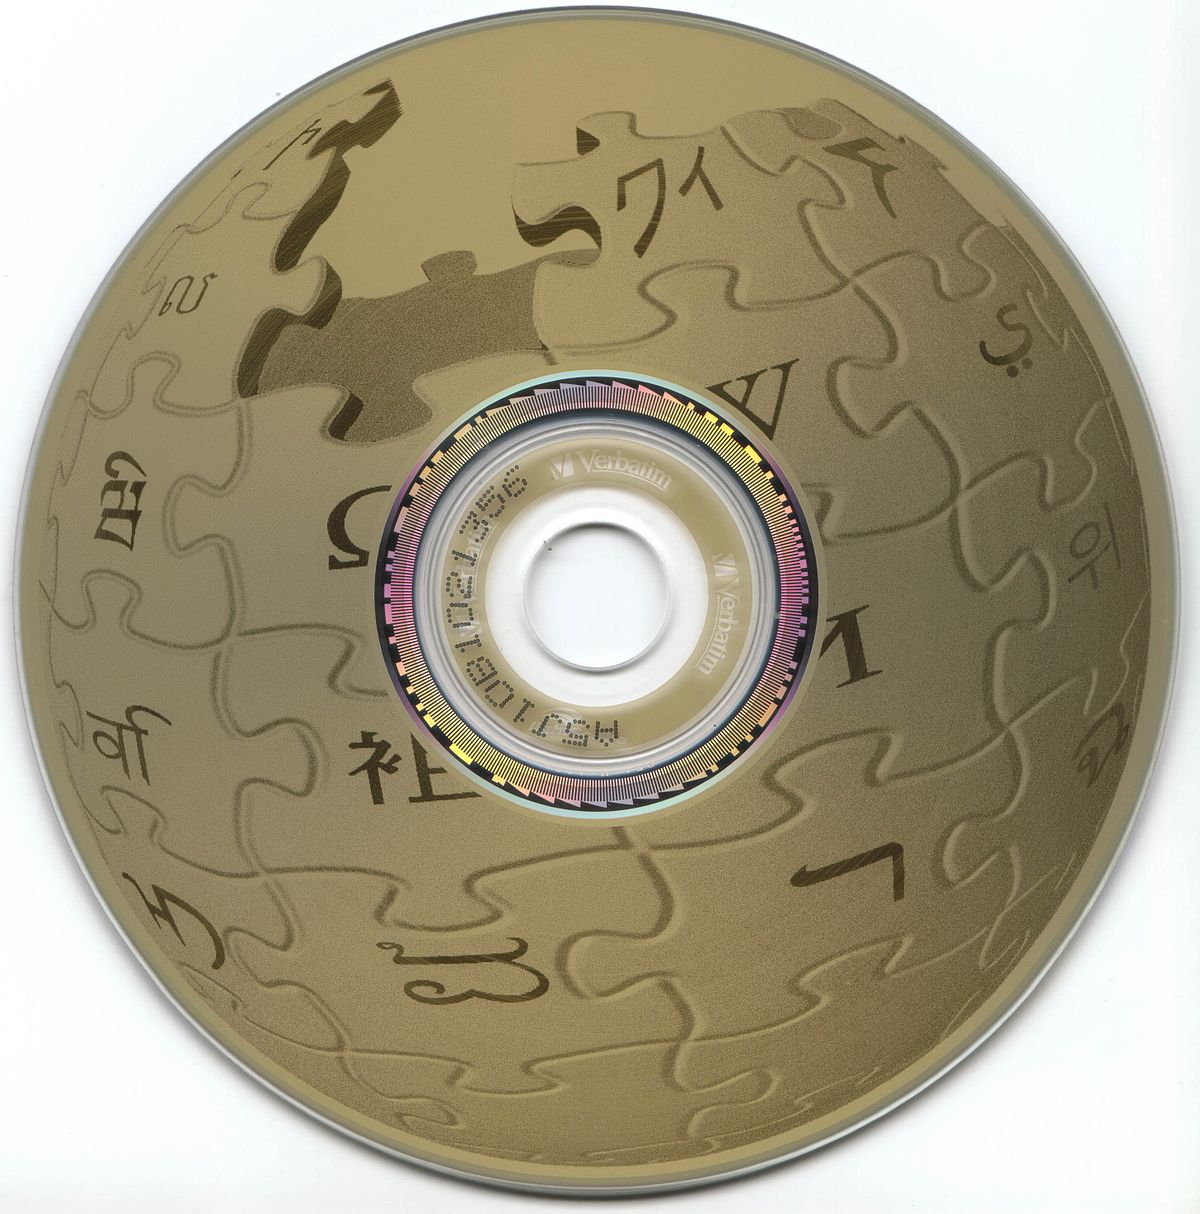 Memorex cd label program free